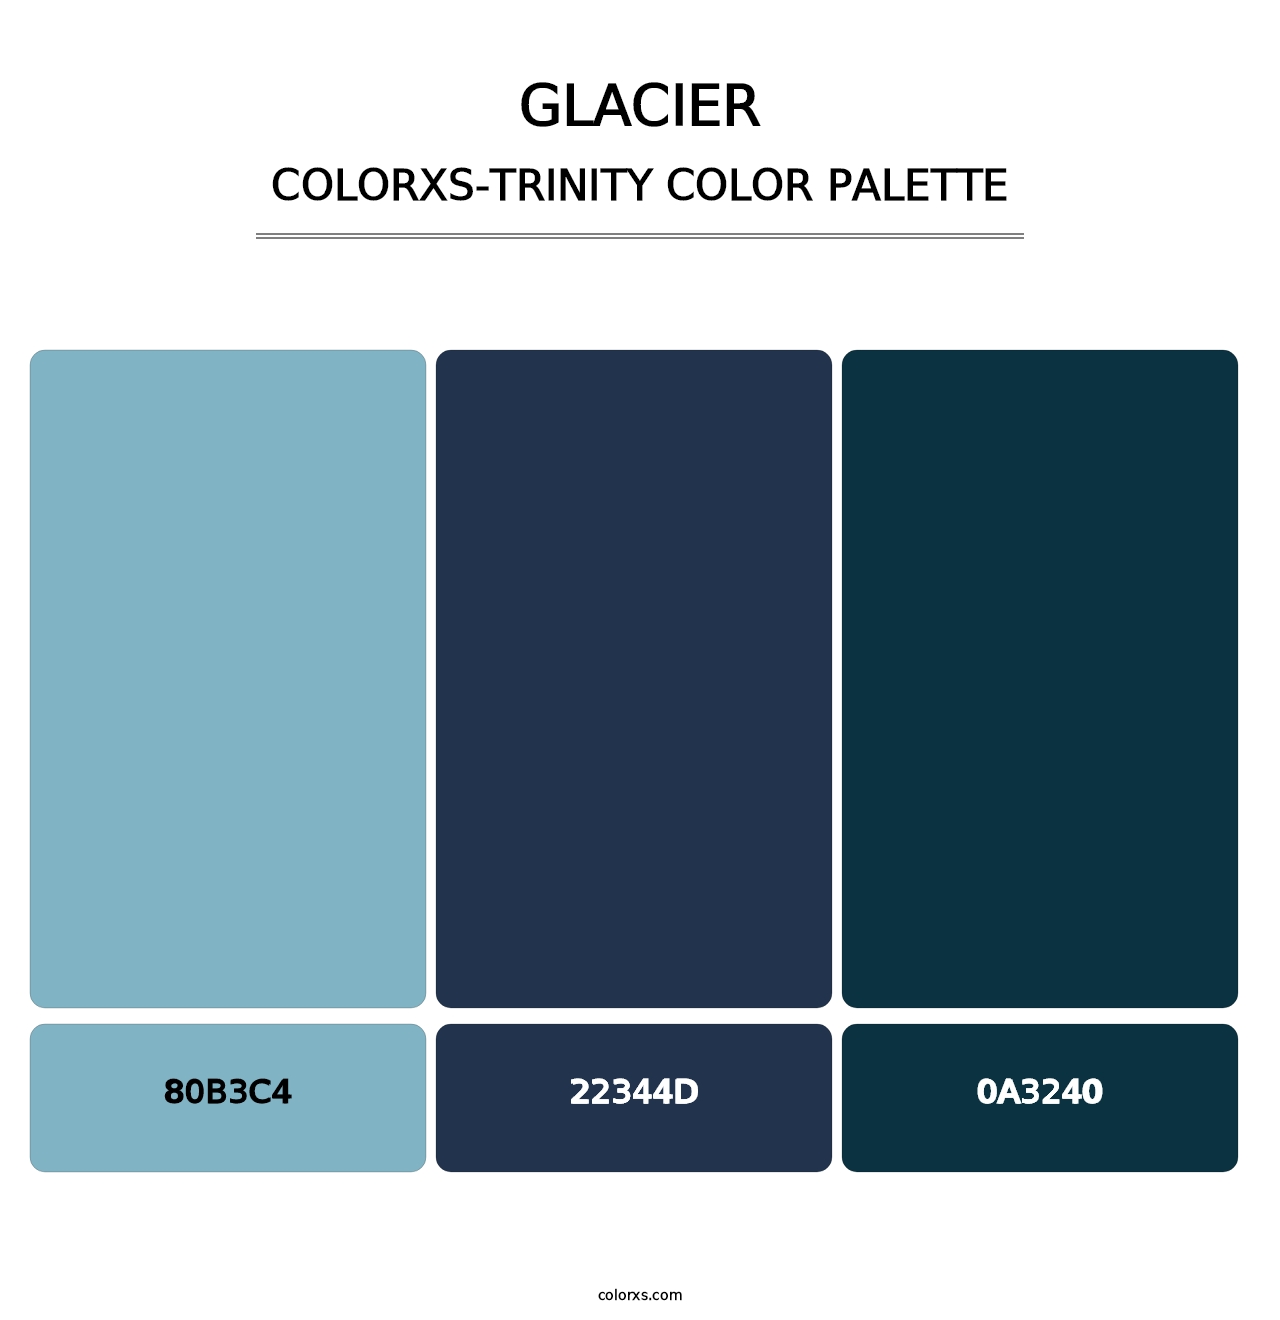 Glacier - Colorxs Trinity Palette